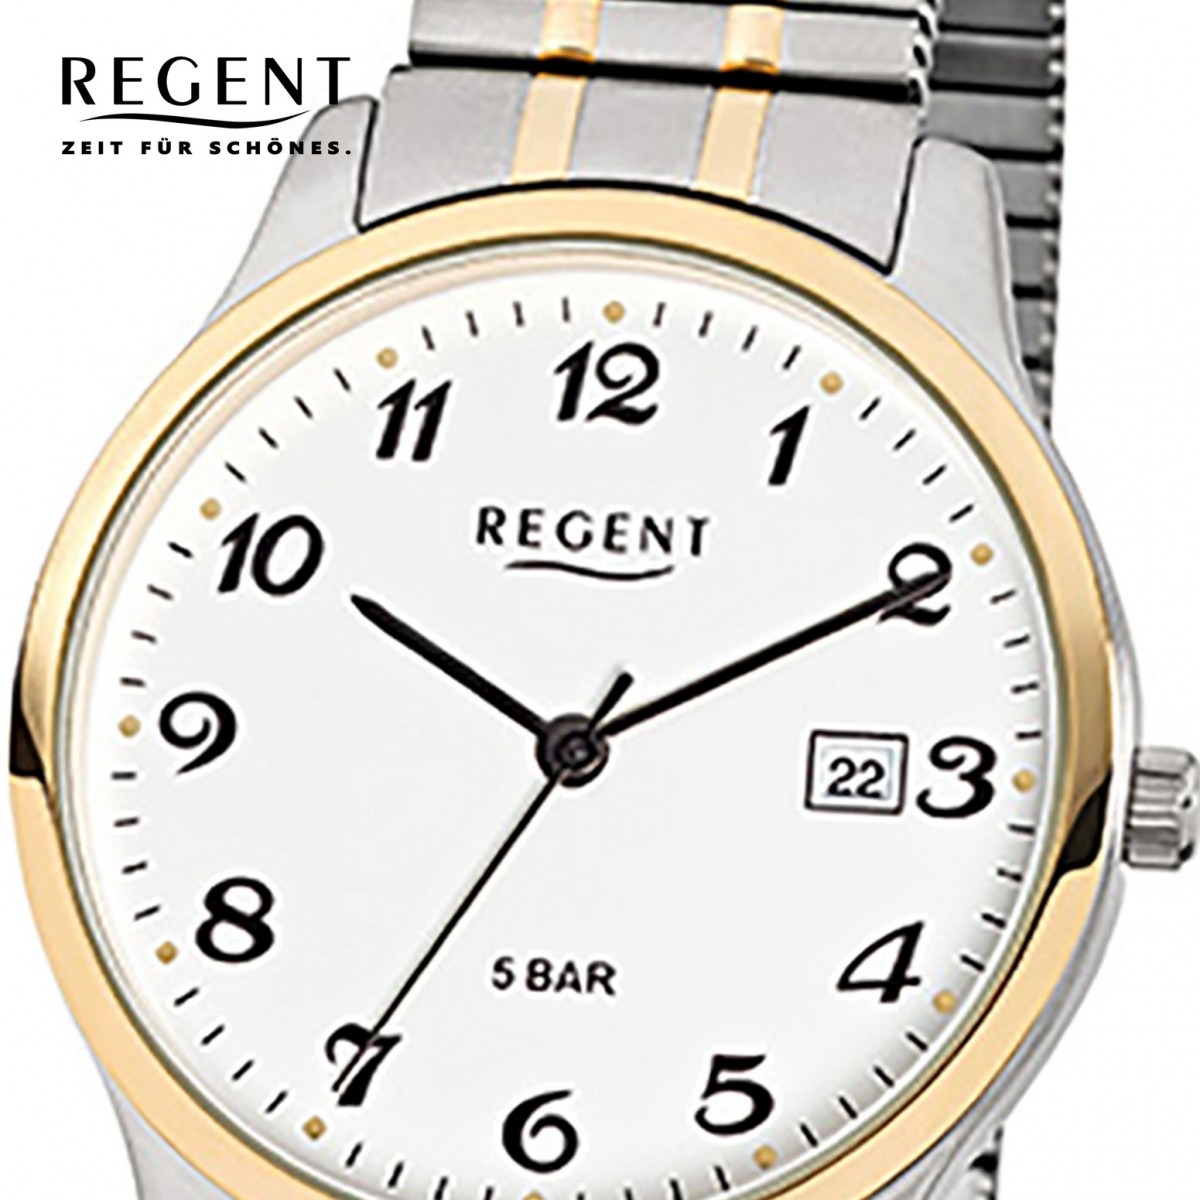 silber Herren-Armbanduhr gold URF877 Quarz-Uhr F-877 Regent Stahl-Armband